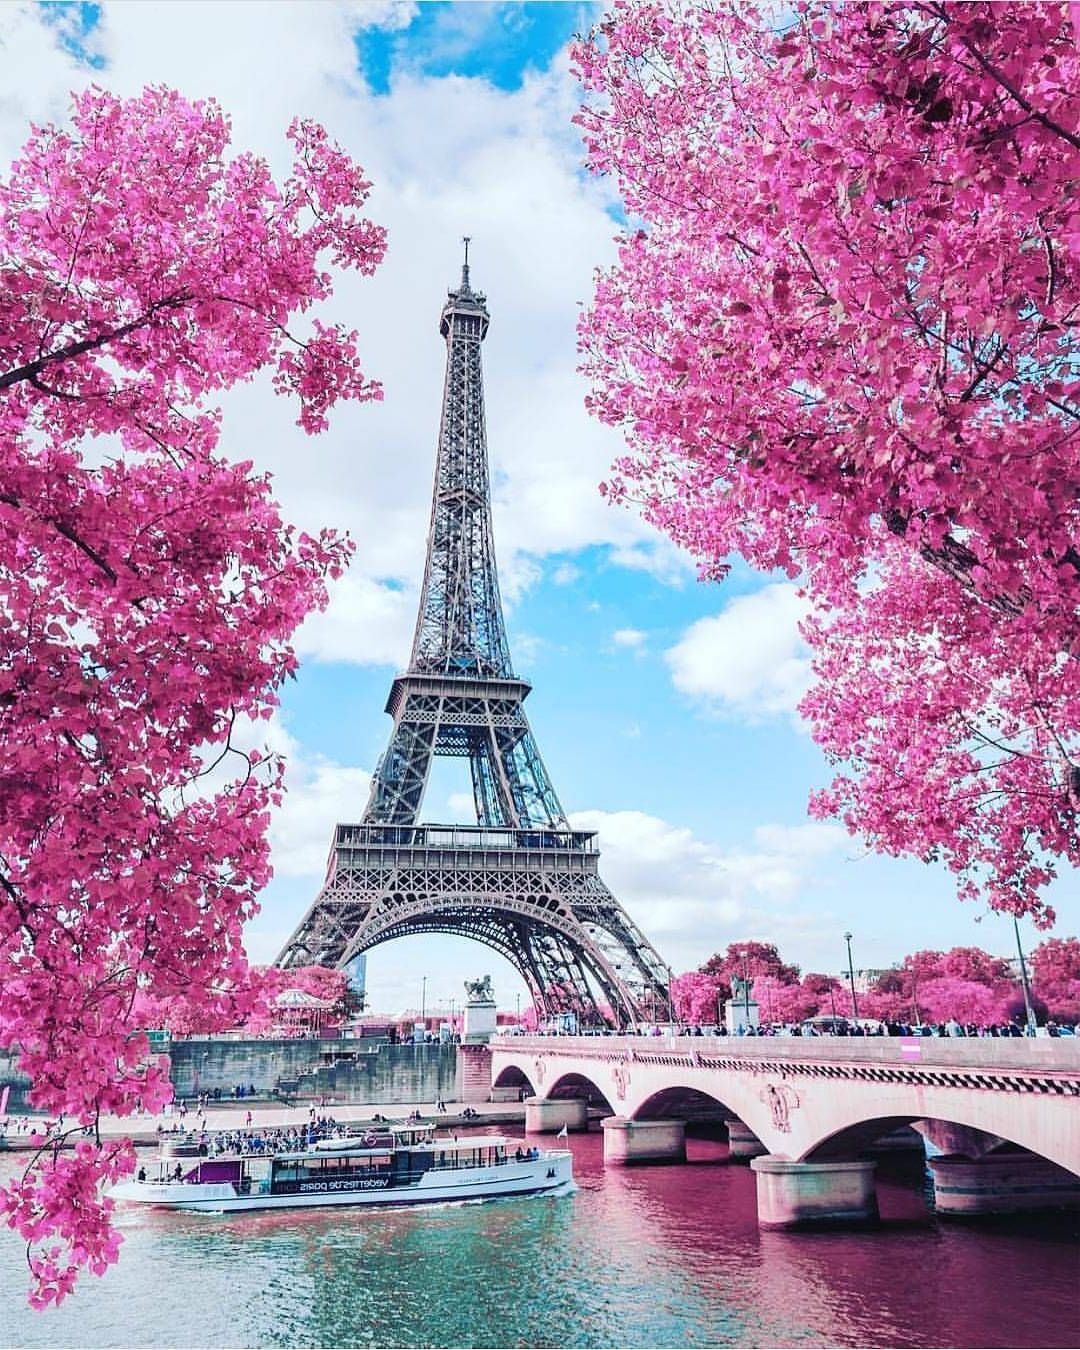 Springtime in Paris image source: Pinterest